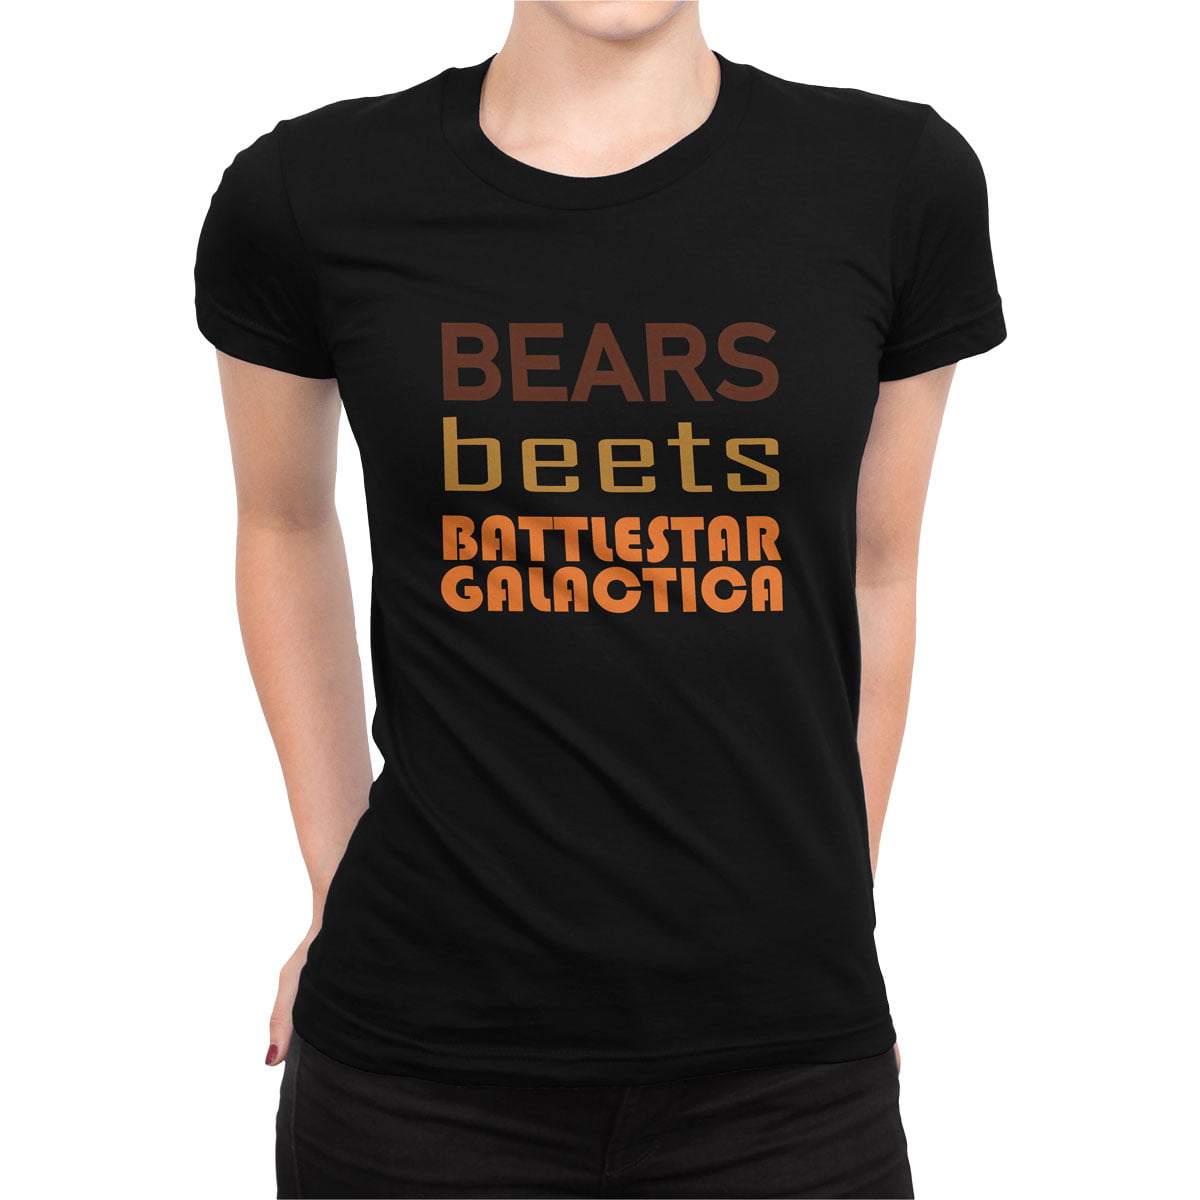 The office bears beets bg kadin tisort s - bears beets battlestar galactica kadın t-shirt - figurex